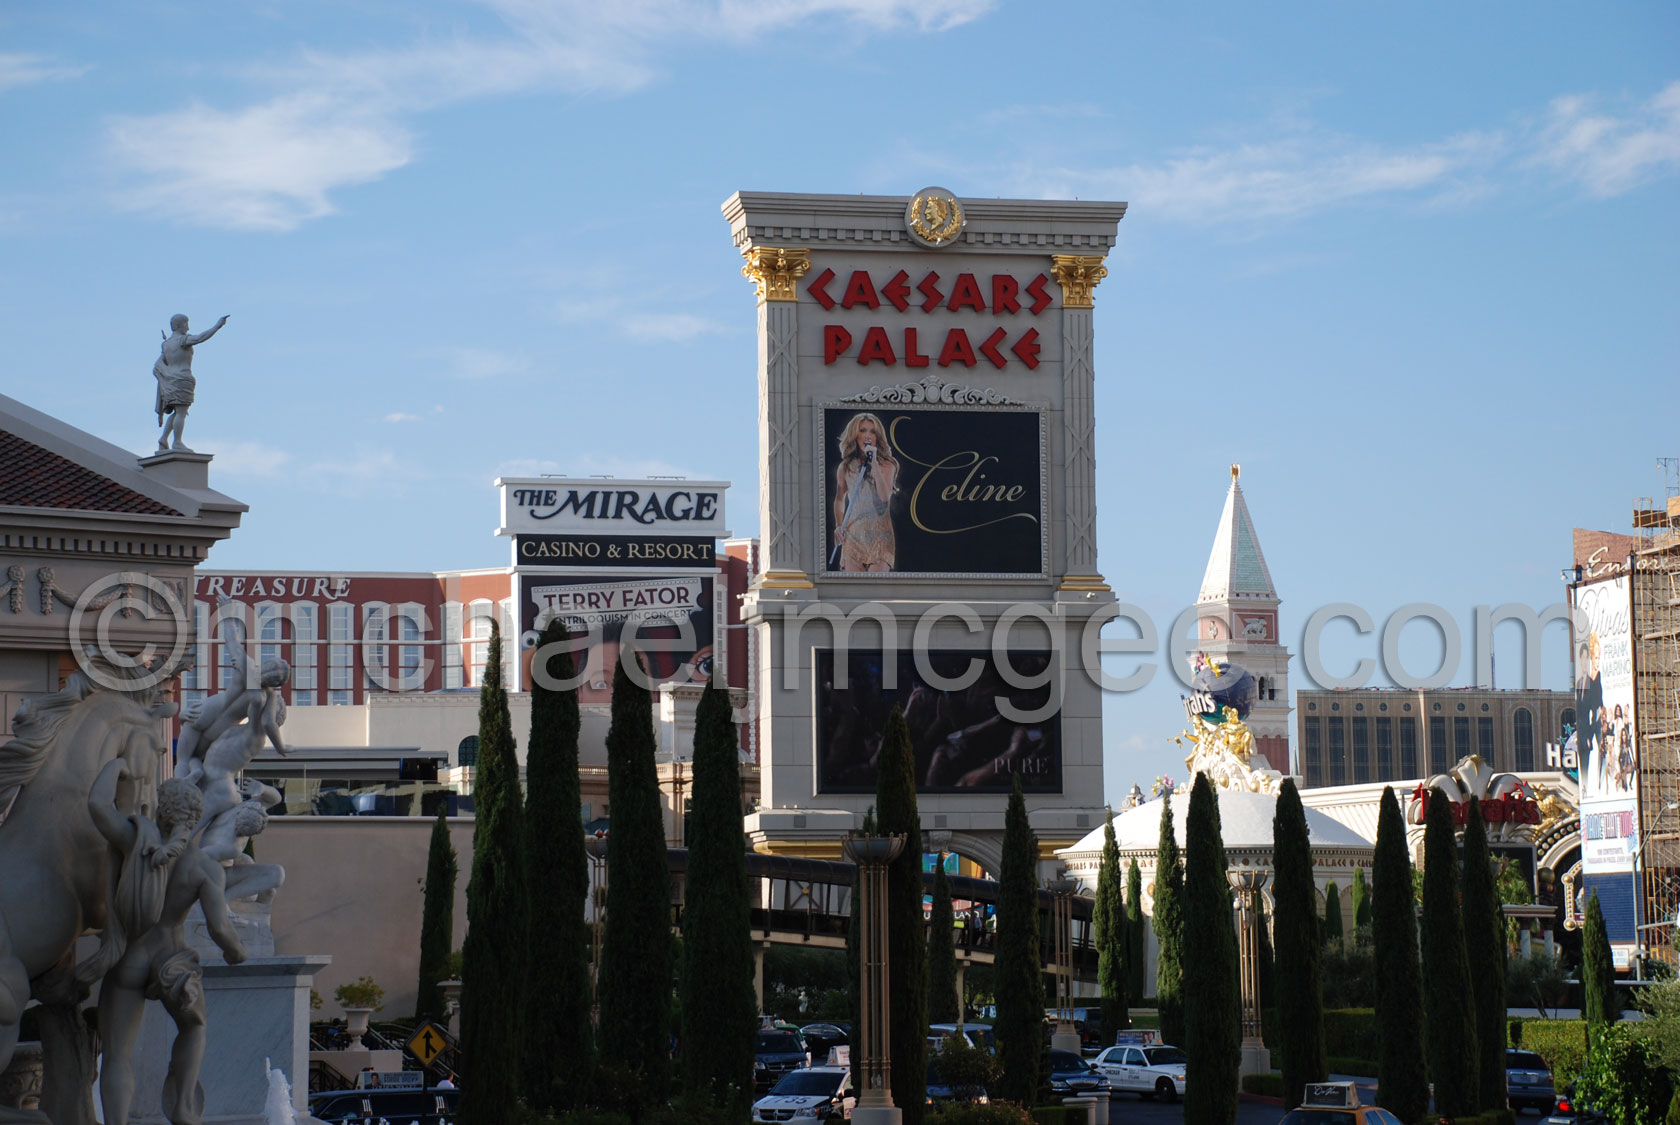 Las Vegas / michaeljmcgee.com